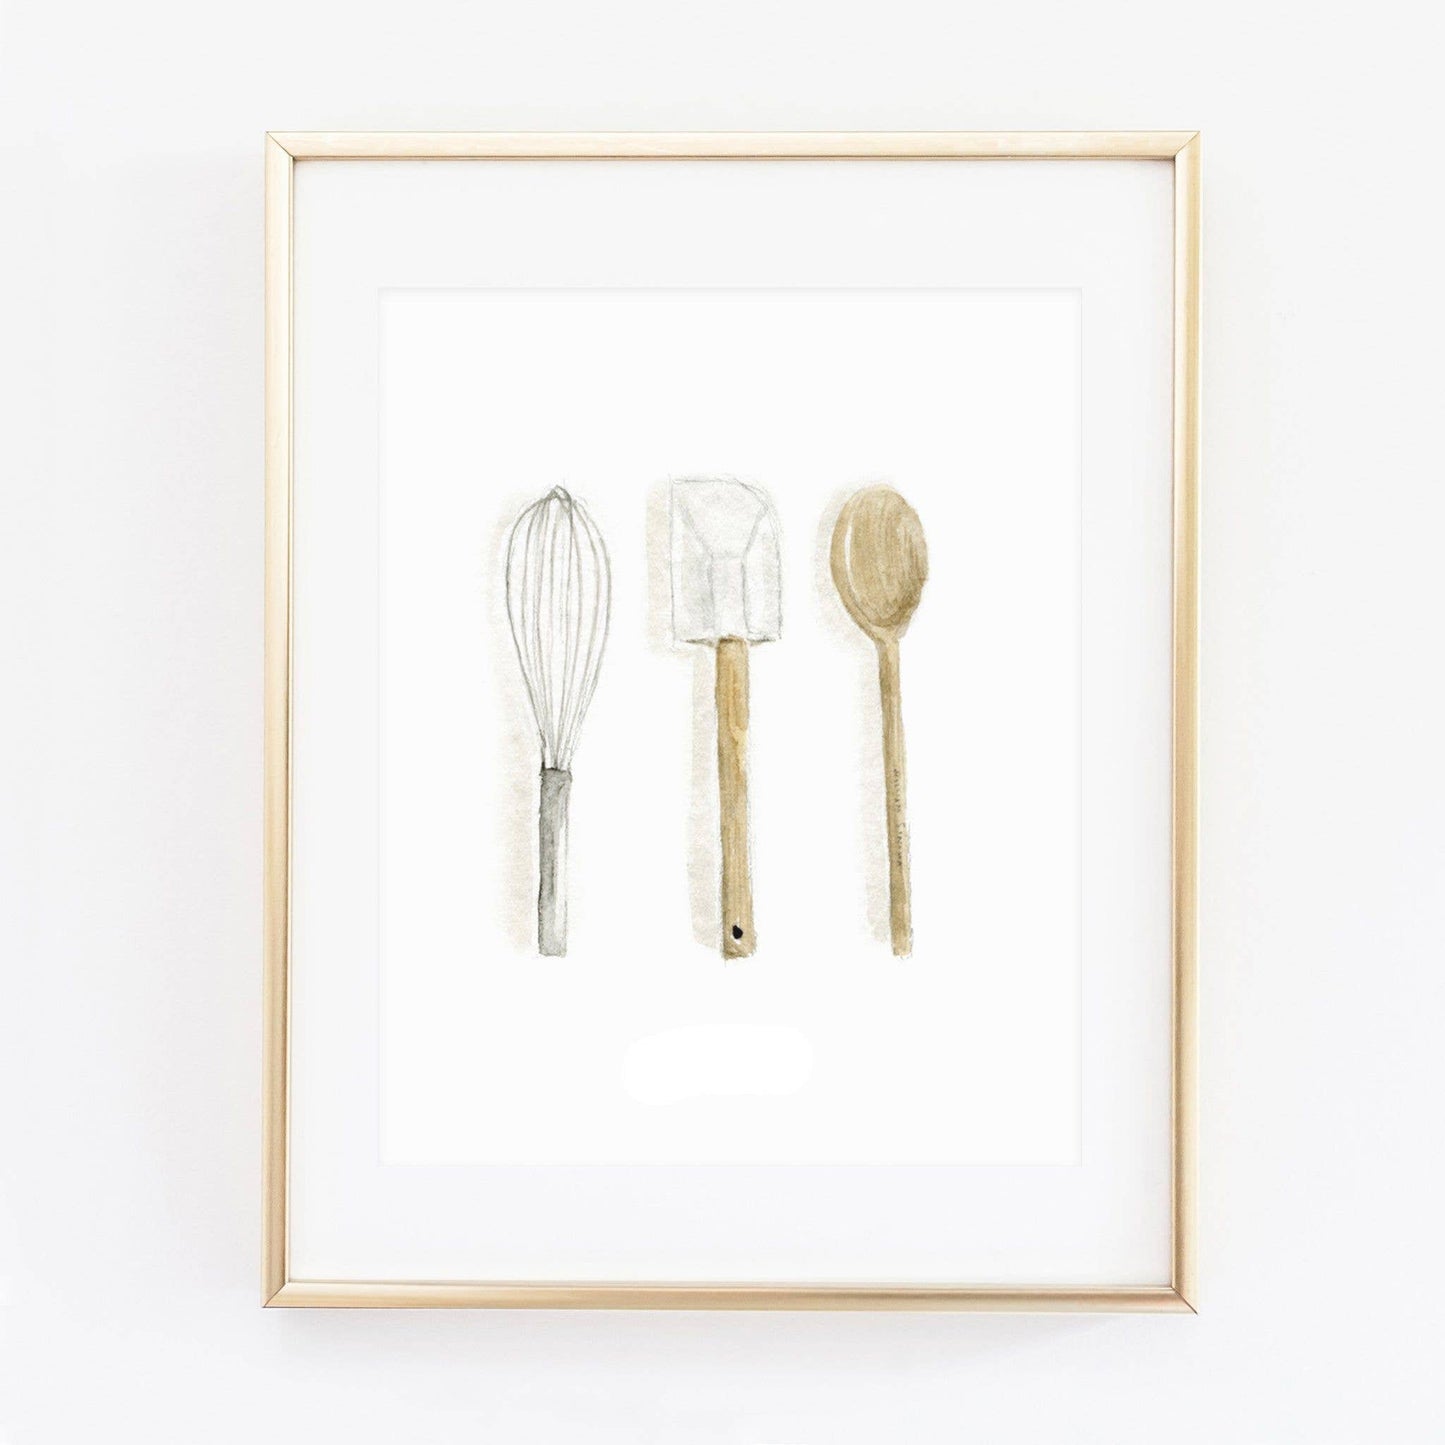 emily lex studio - utensils art print